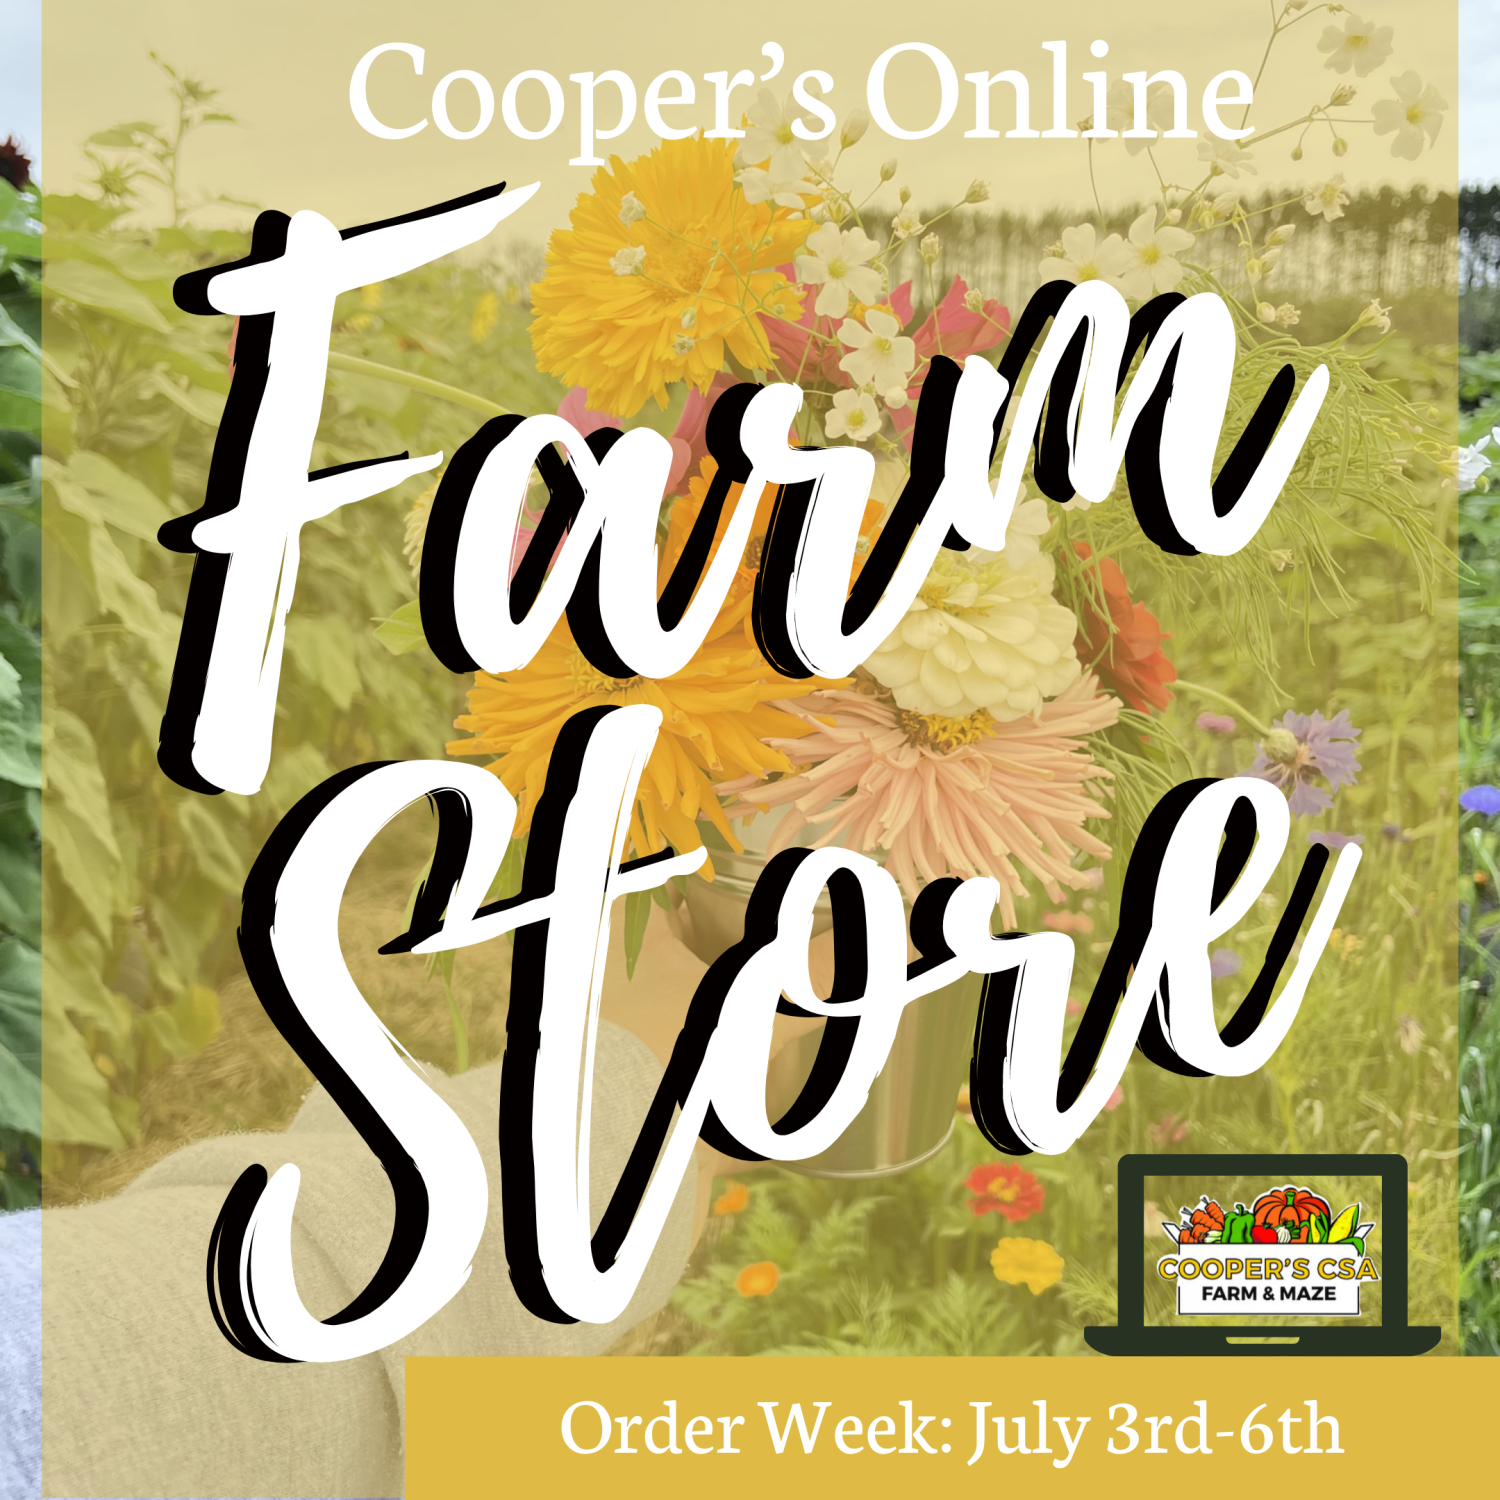 Next Happening: Coopers CSA Online FarmStore- Order week July 3rd-6th